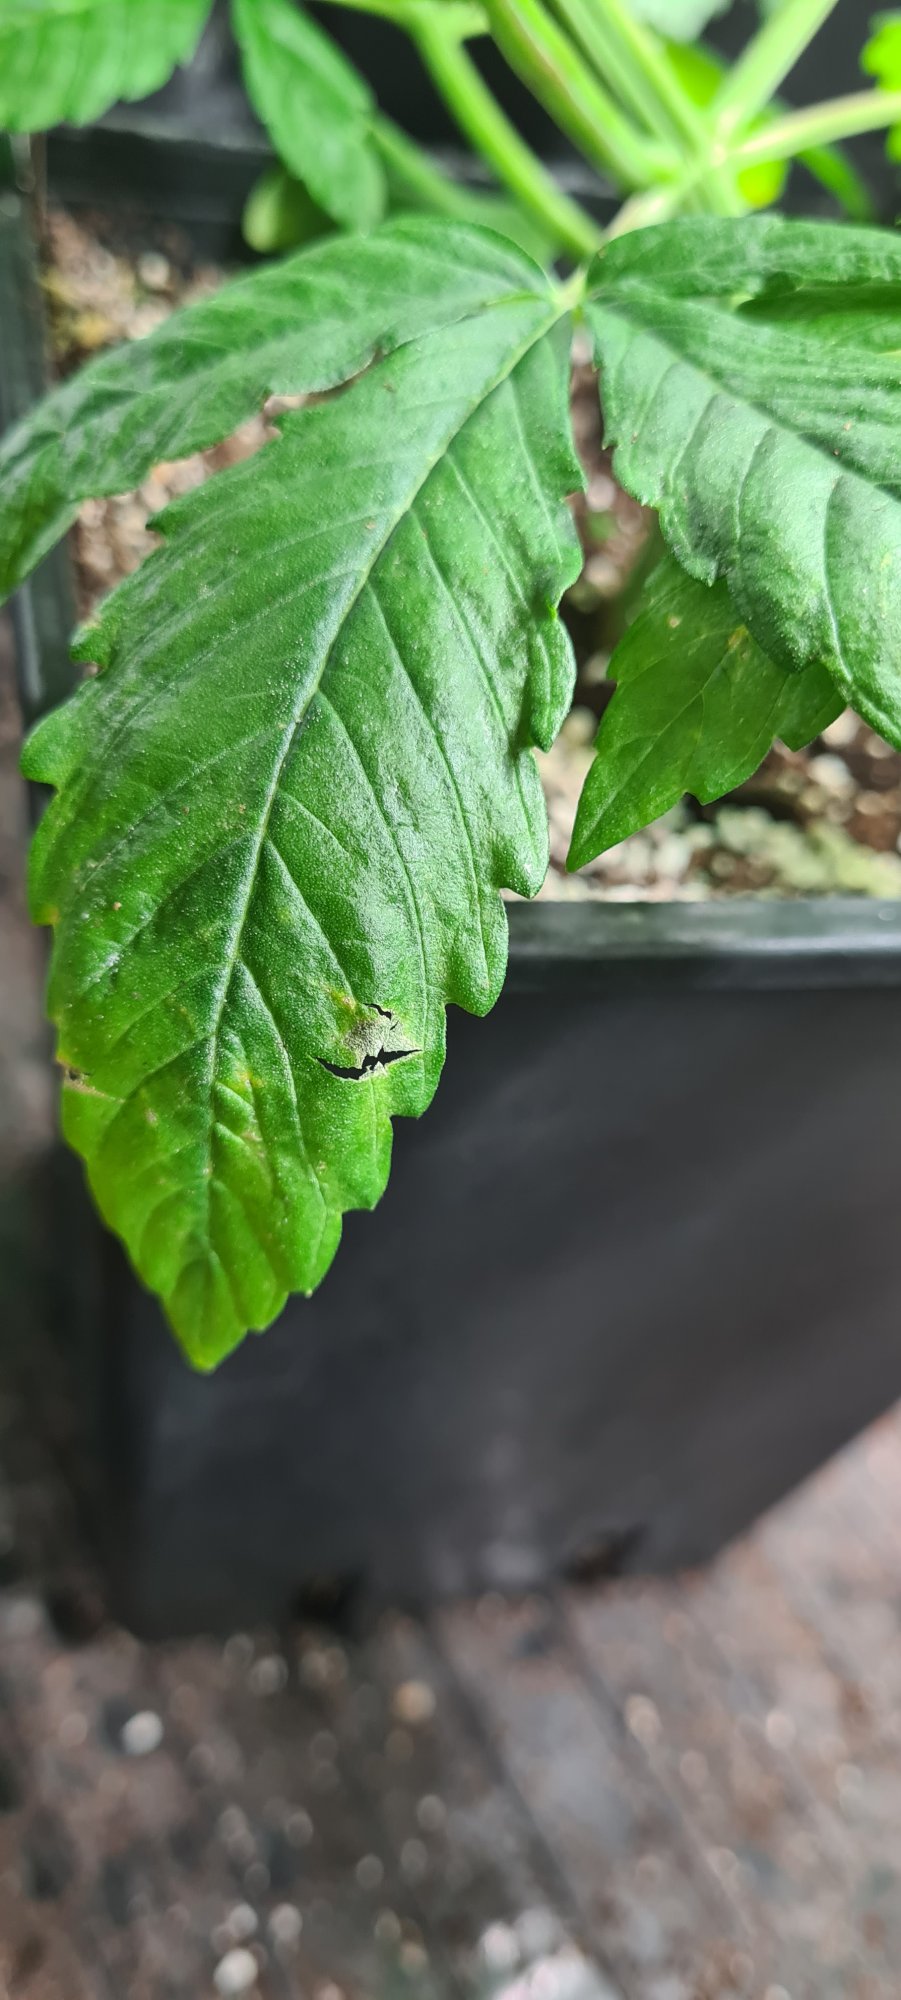 Leaf deformation deficiency or pest 4